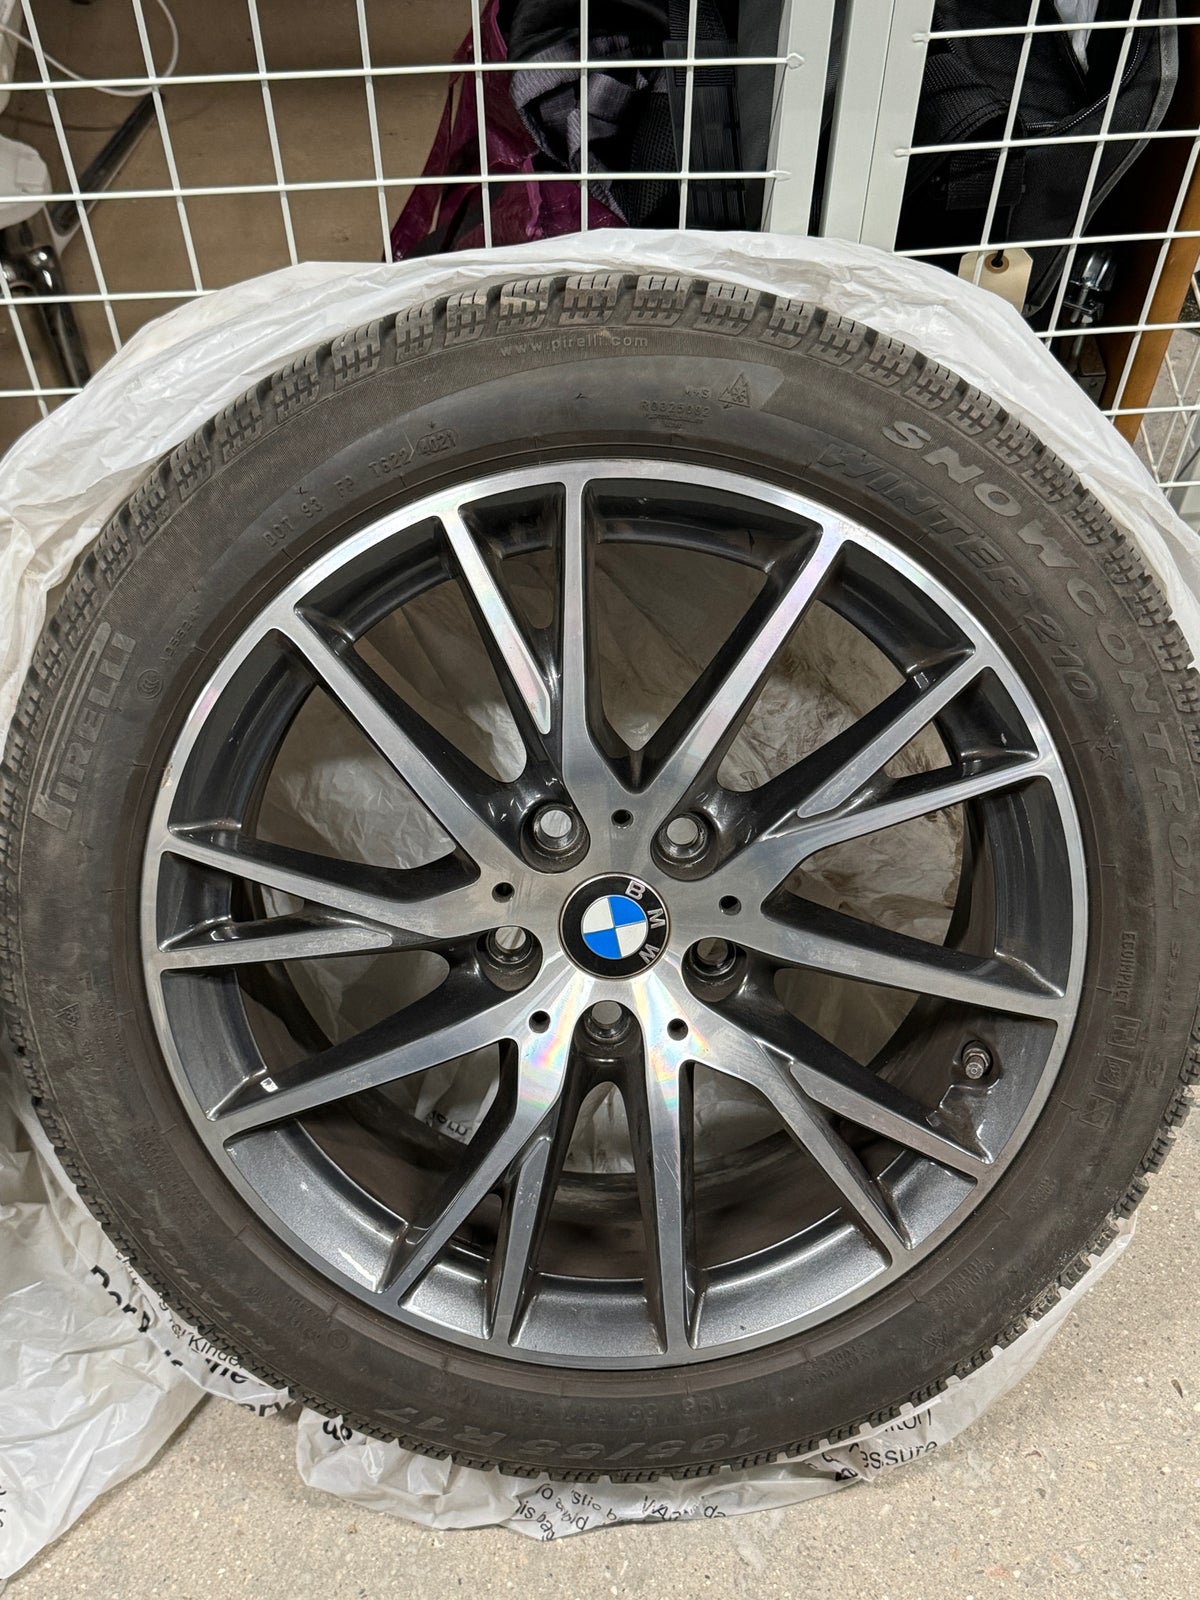 BMW vinterhjul - Style 489, 17